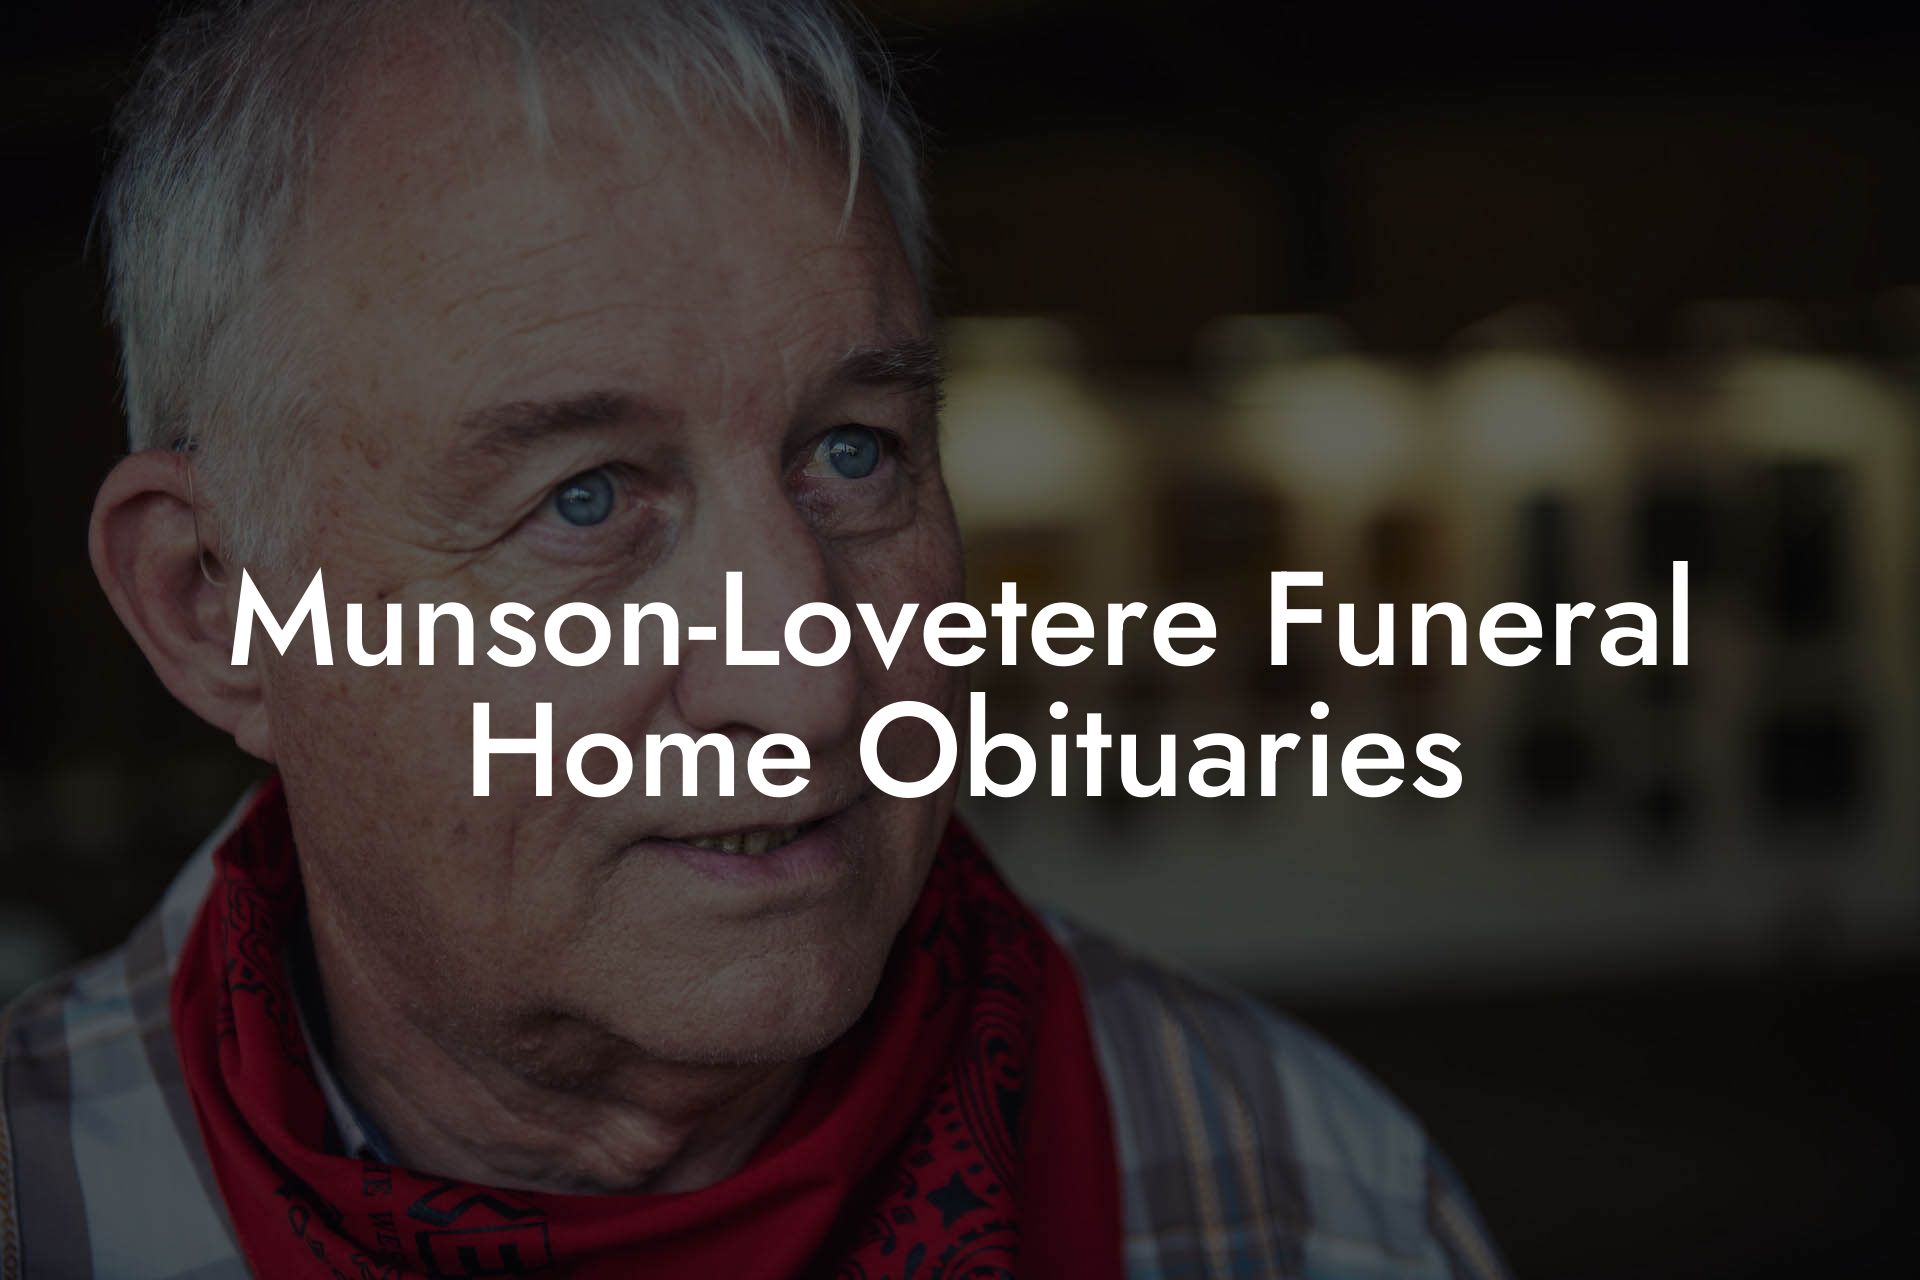 Munson-Lovetere Funeral Home Obituaries